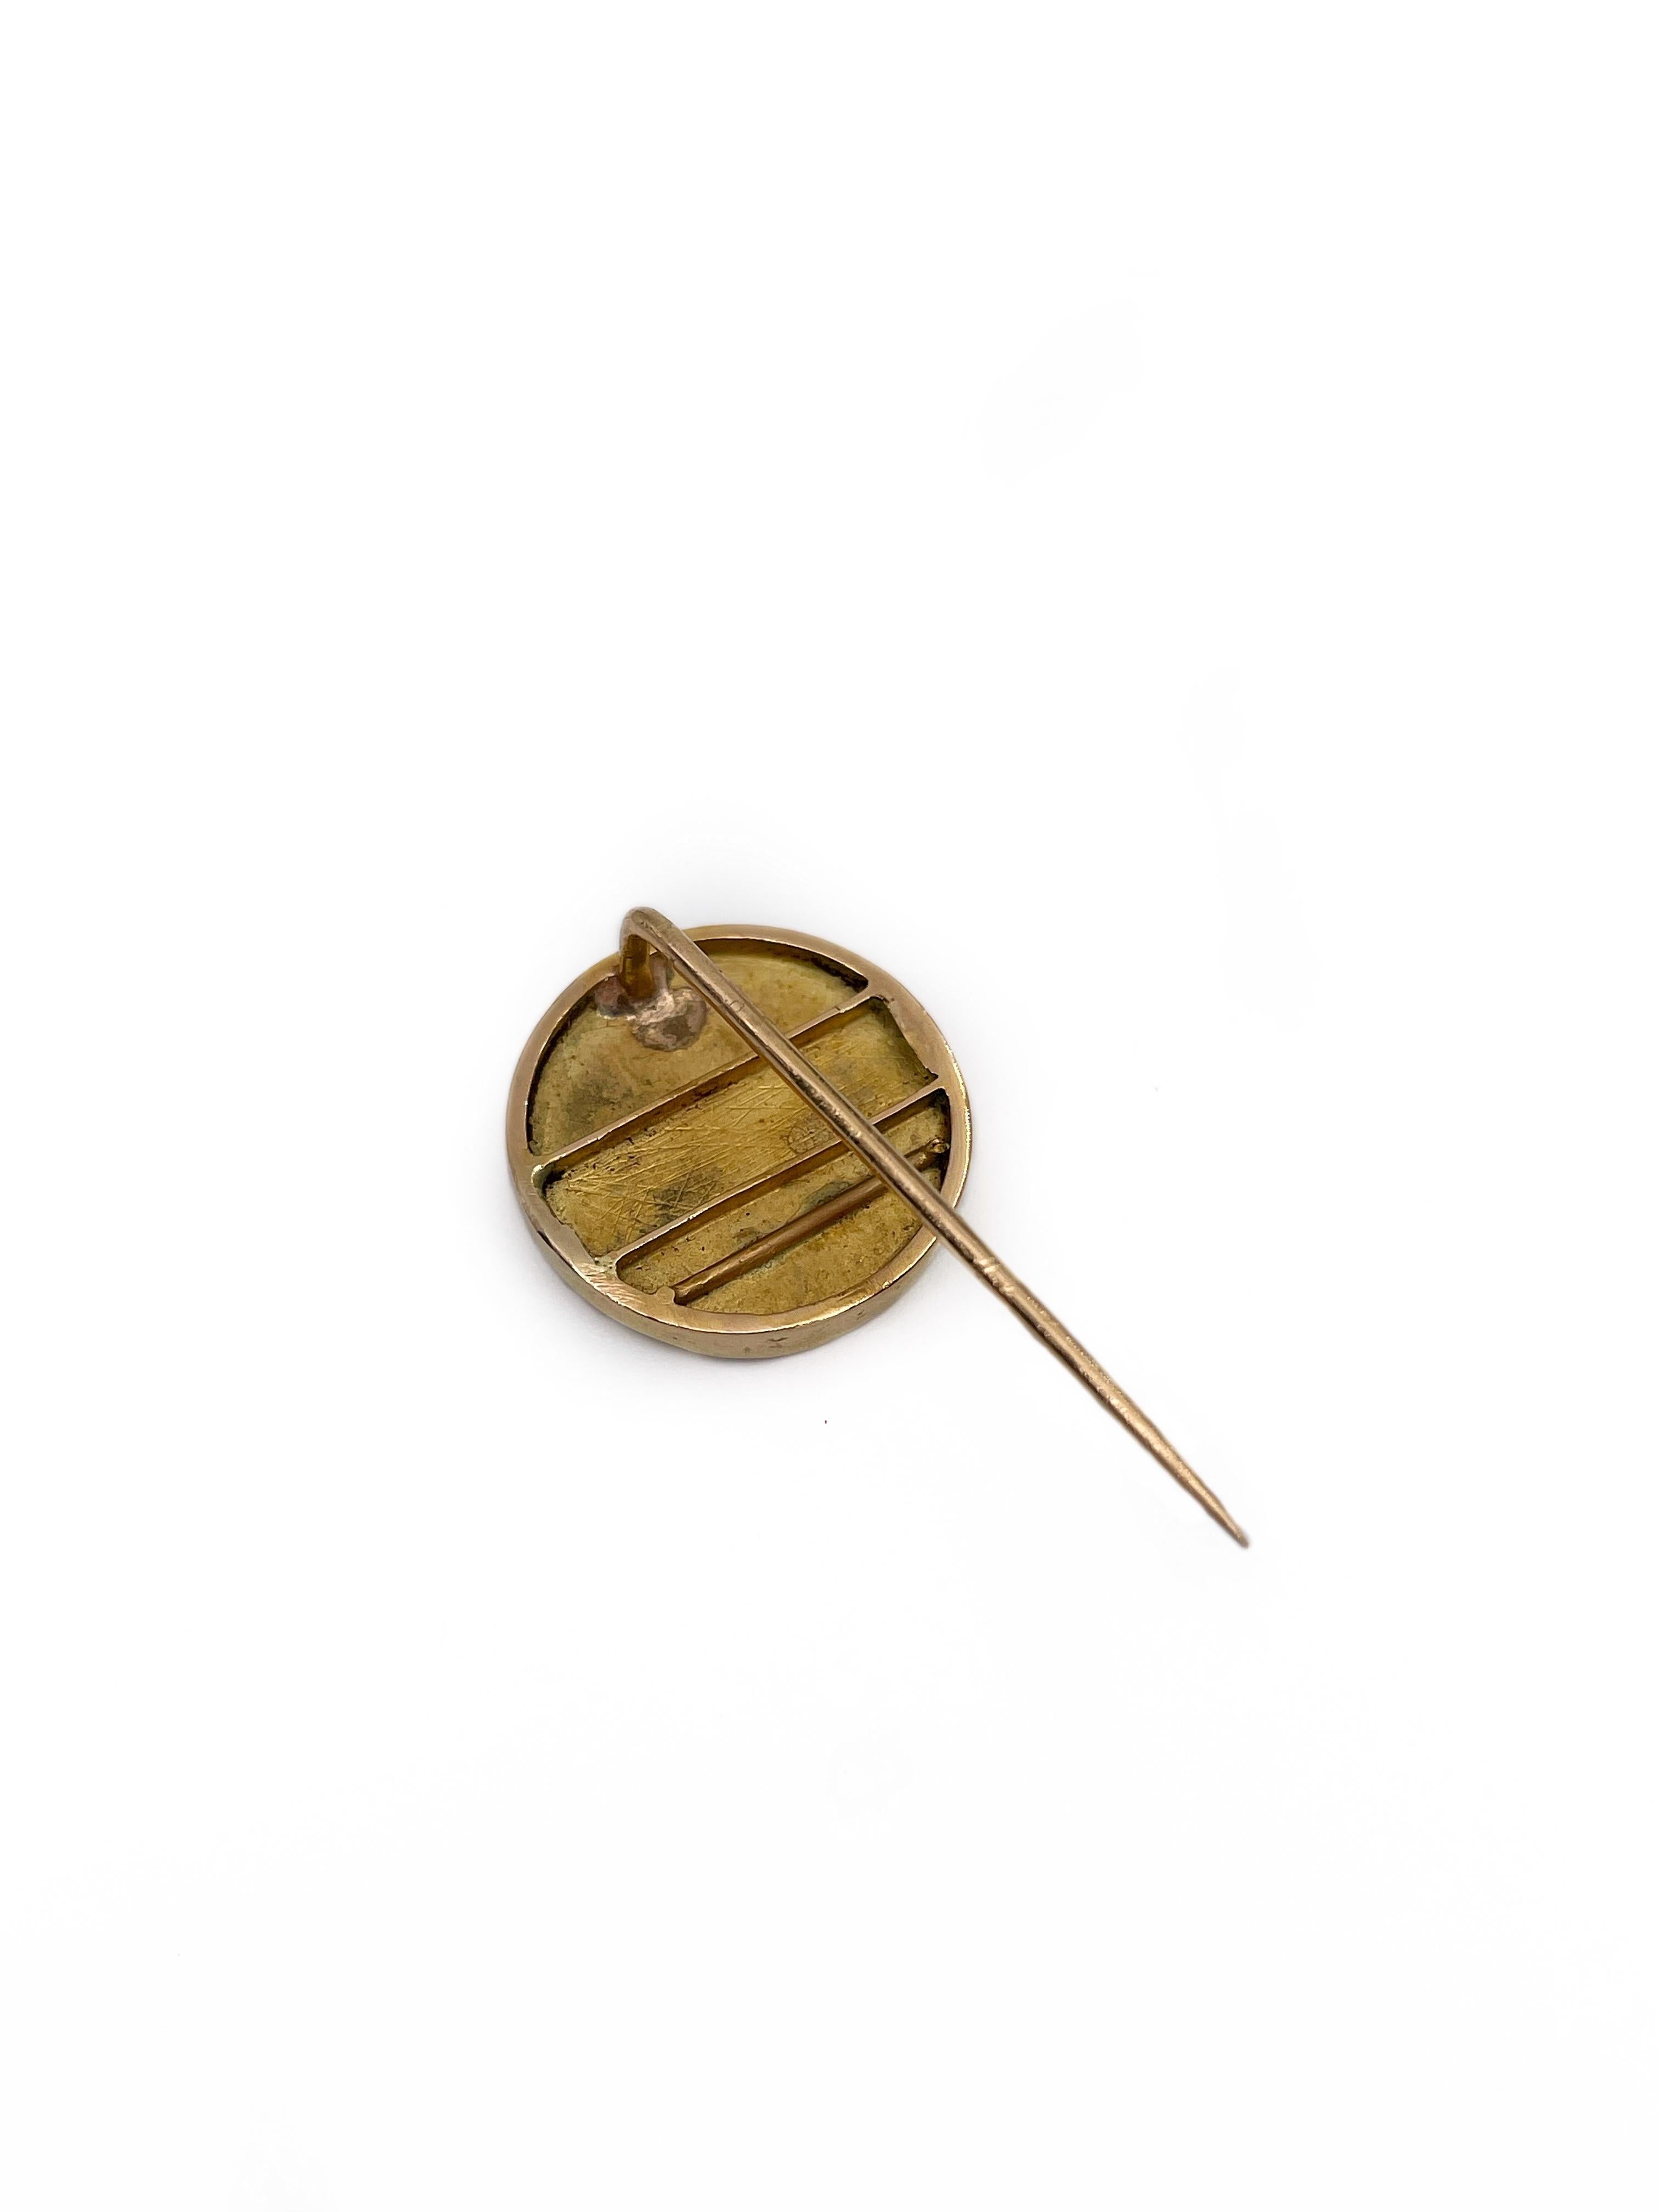 Comte Prosper D’Epinay De Briort Art Nouveau 18K Yellow Gold Lady Tie Pin 1